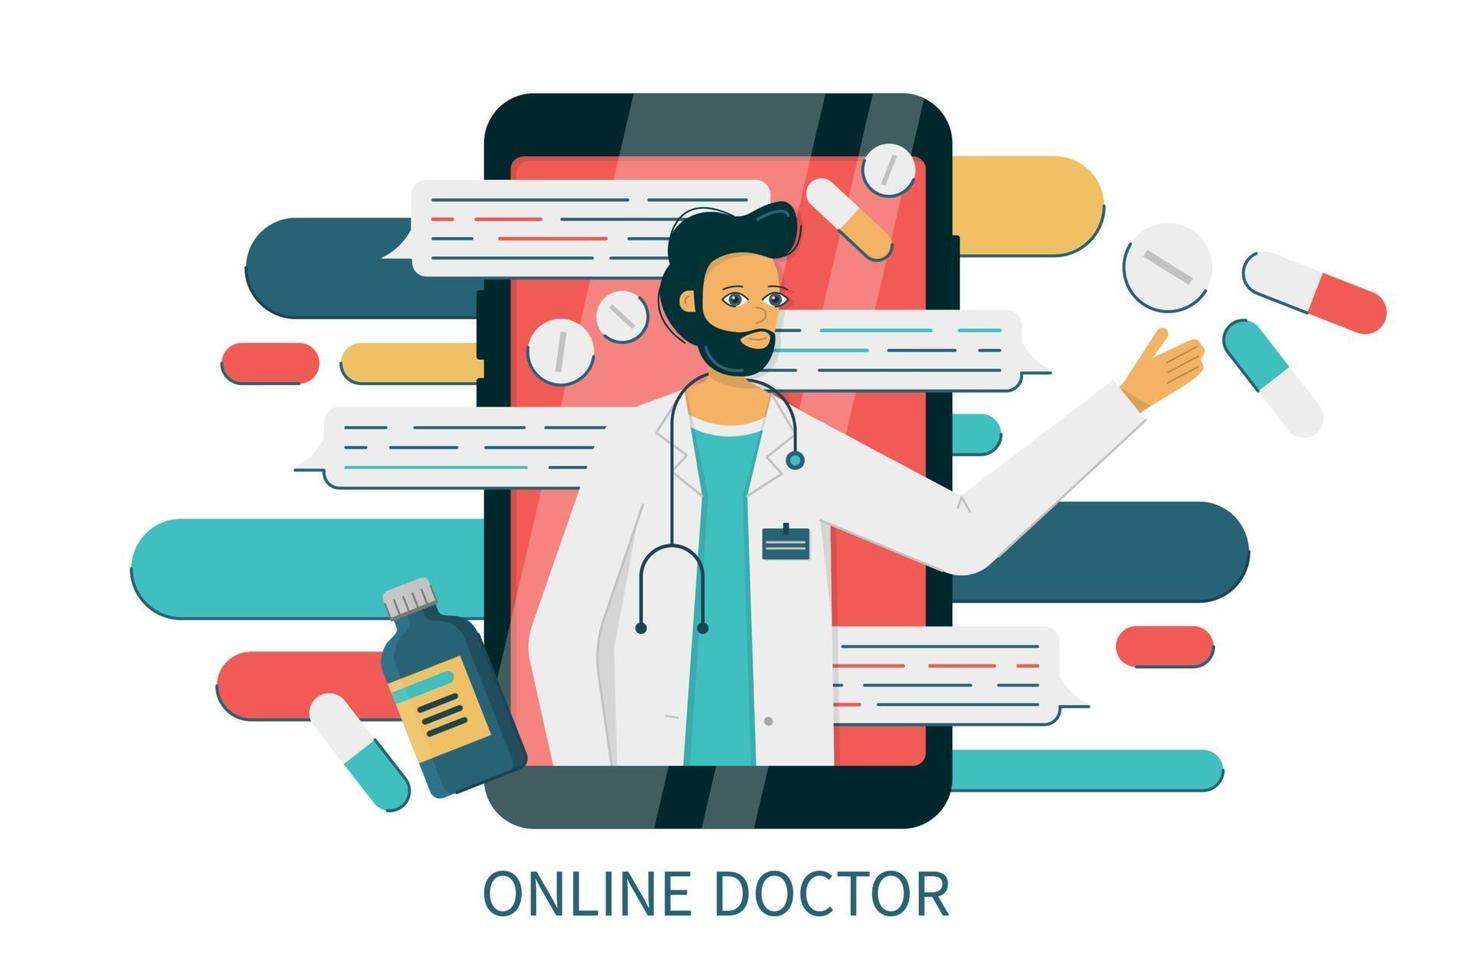 smartphone avec chat internet avec un médecin de sexe masculin vecteur